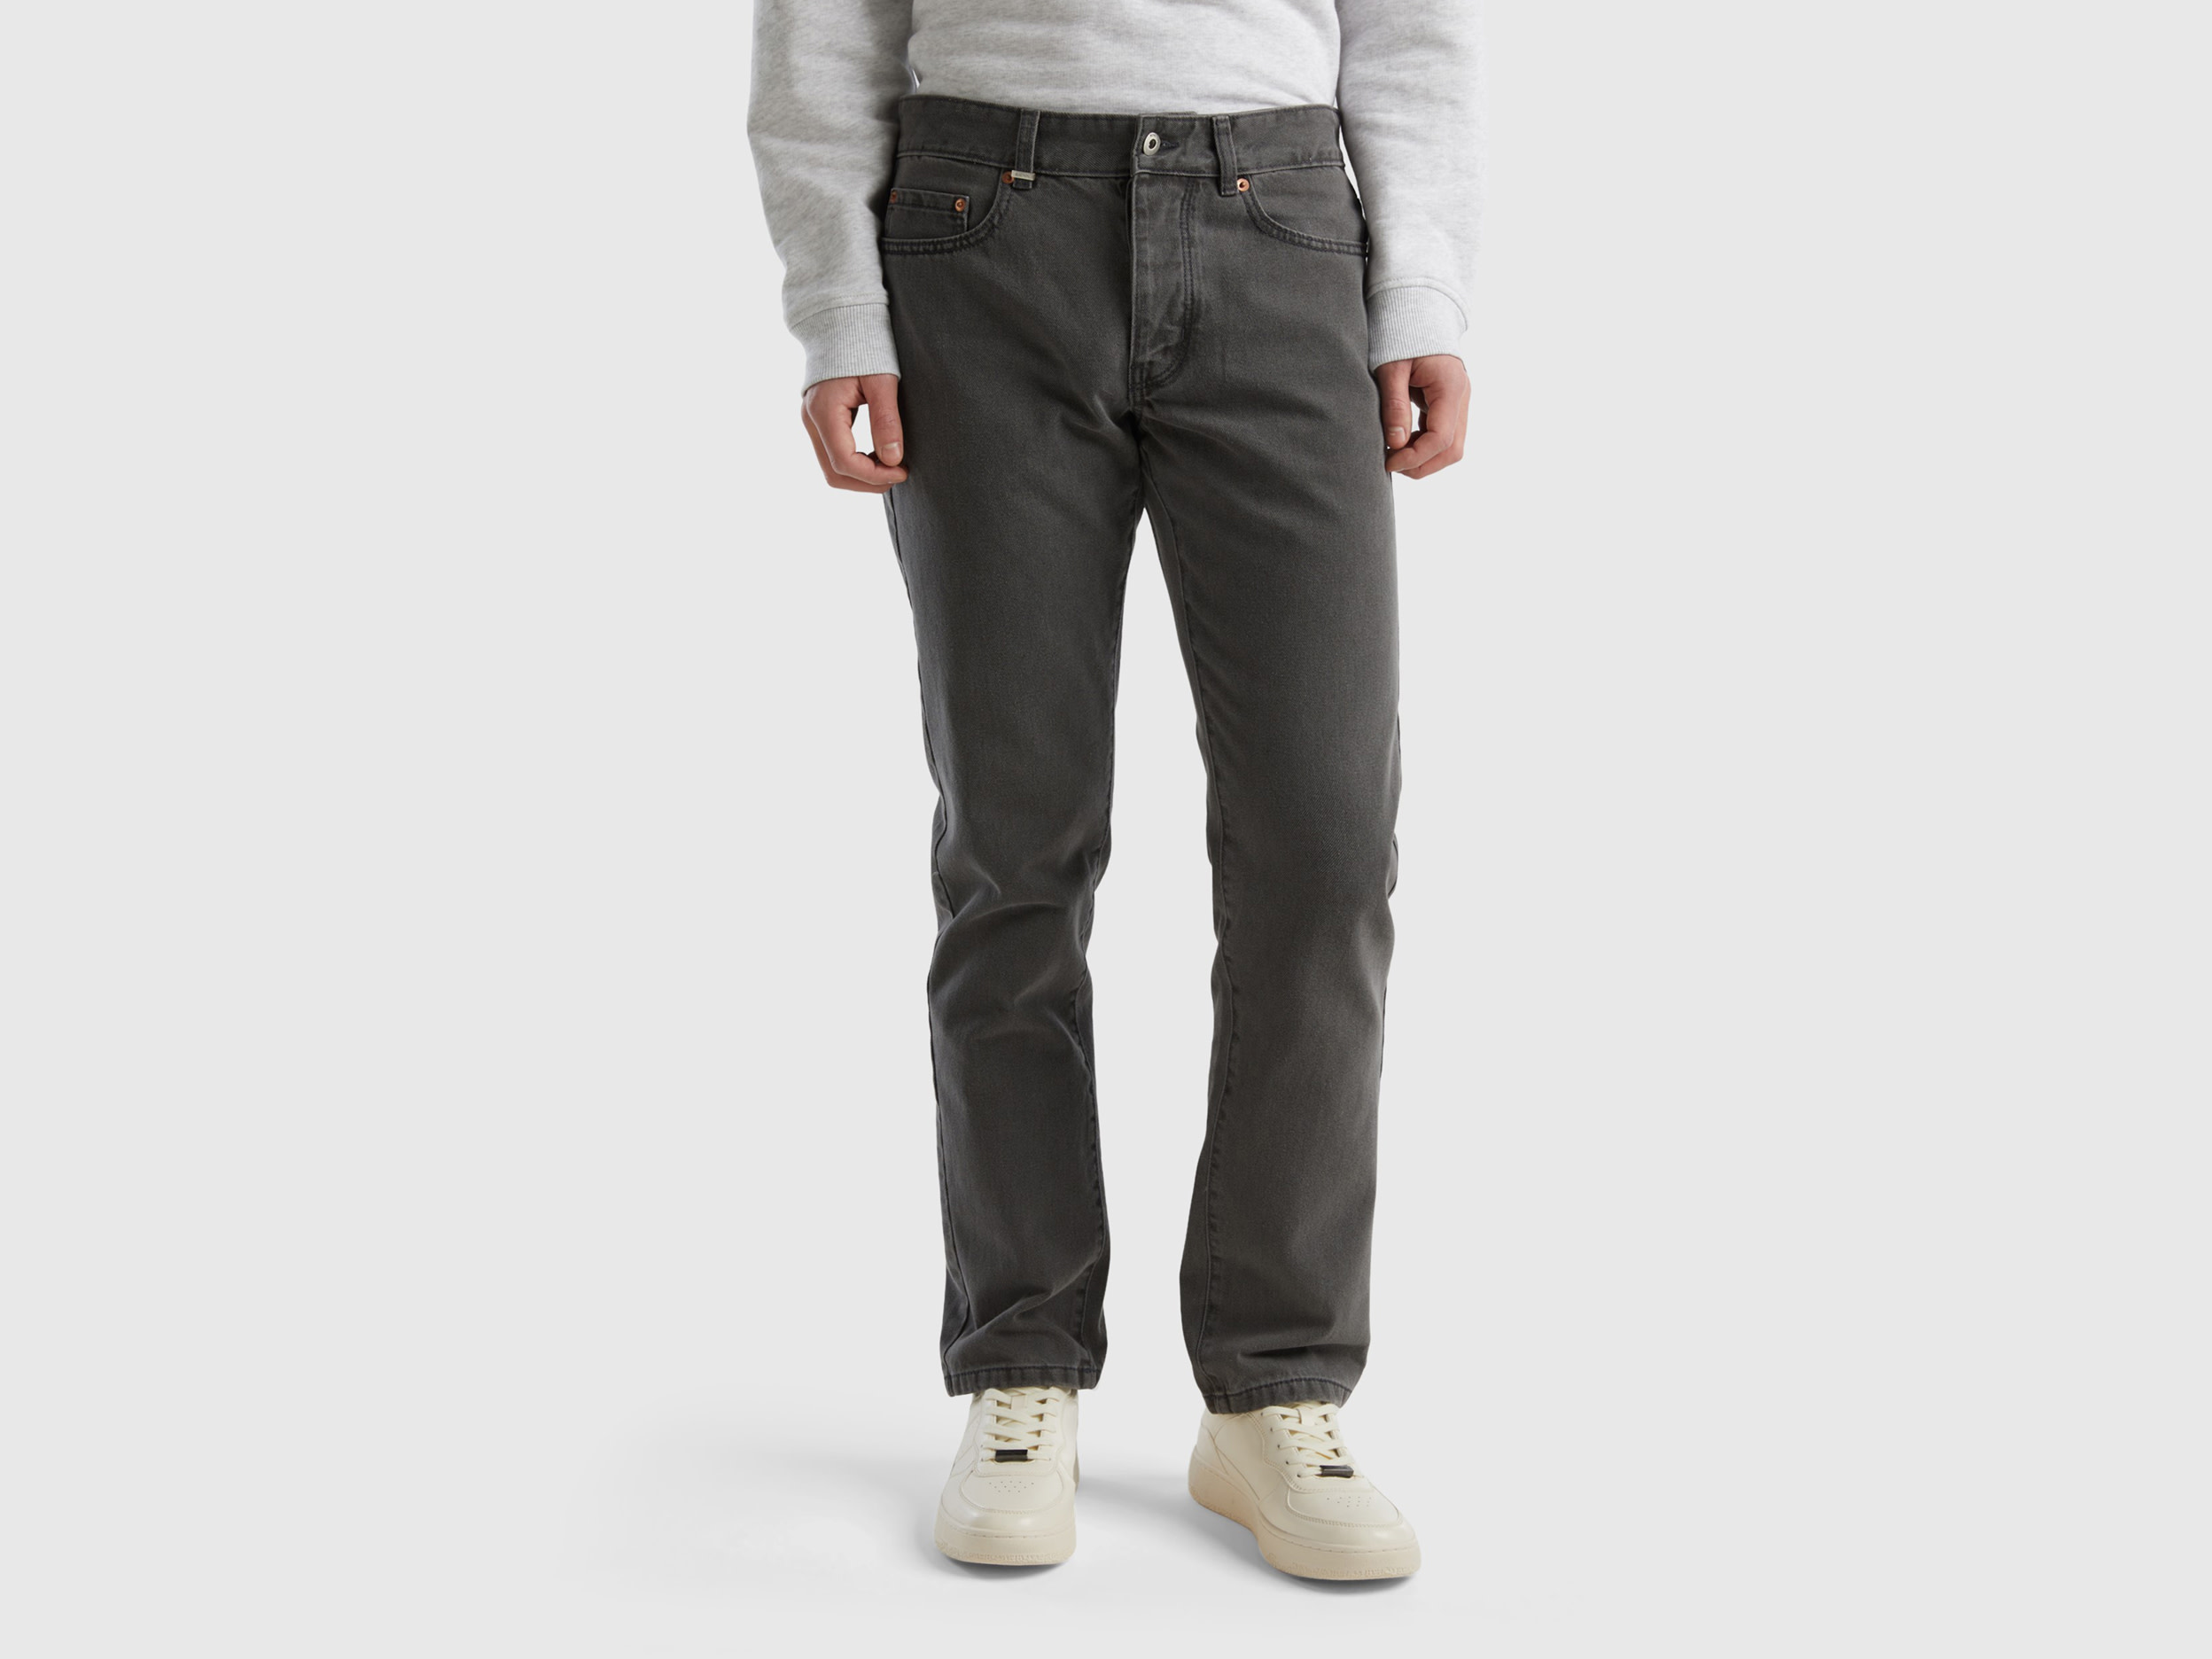 Benetton, Straight Fit Jeans, size 35, Dark Gray, Men